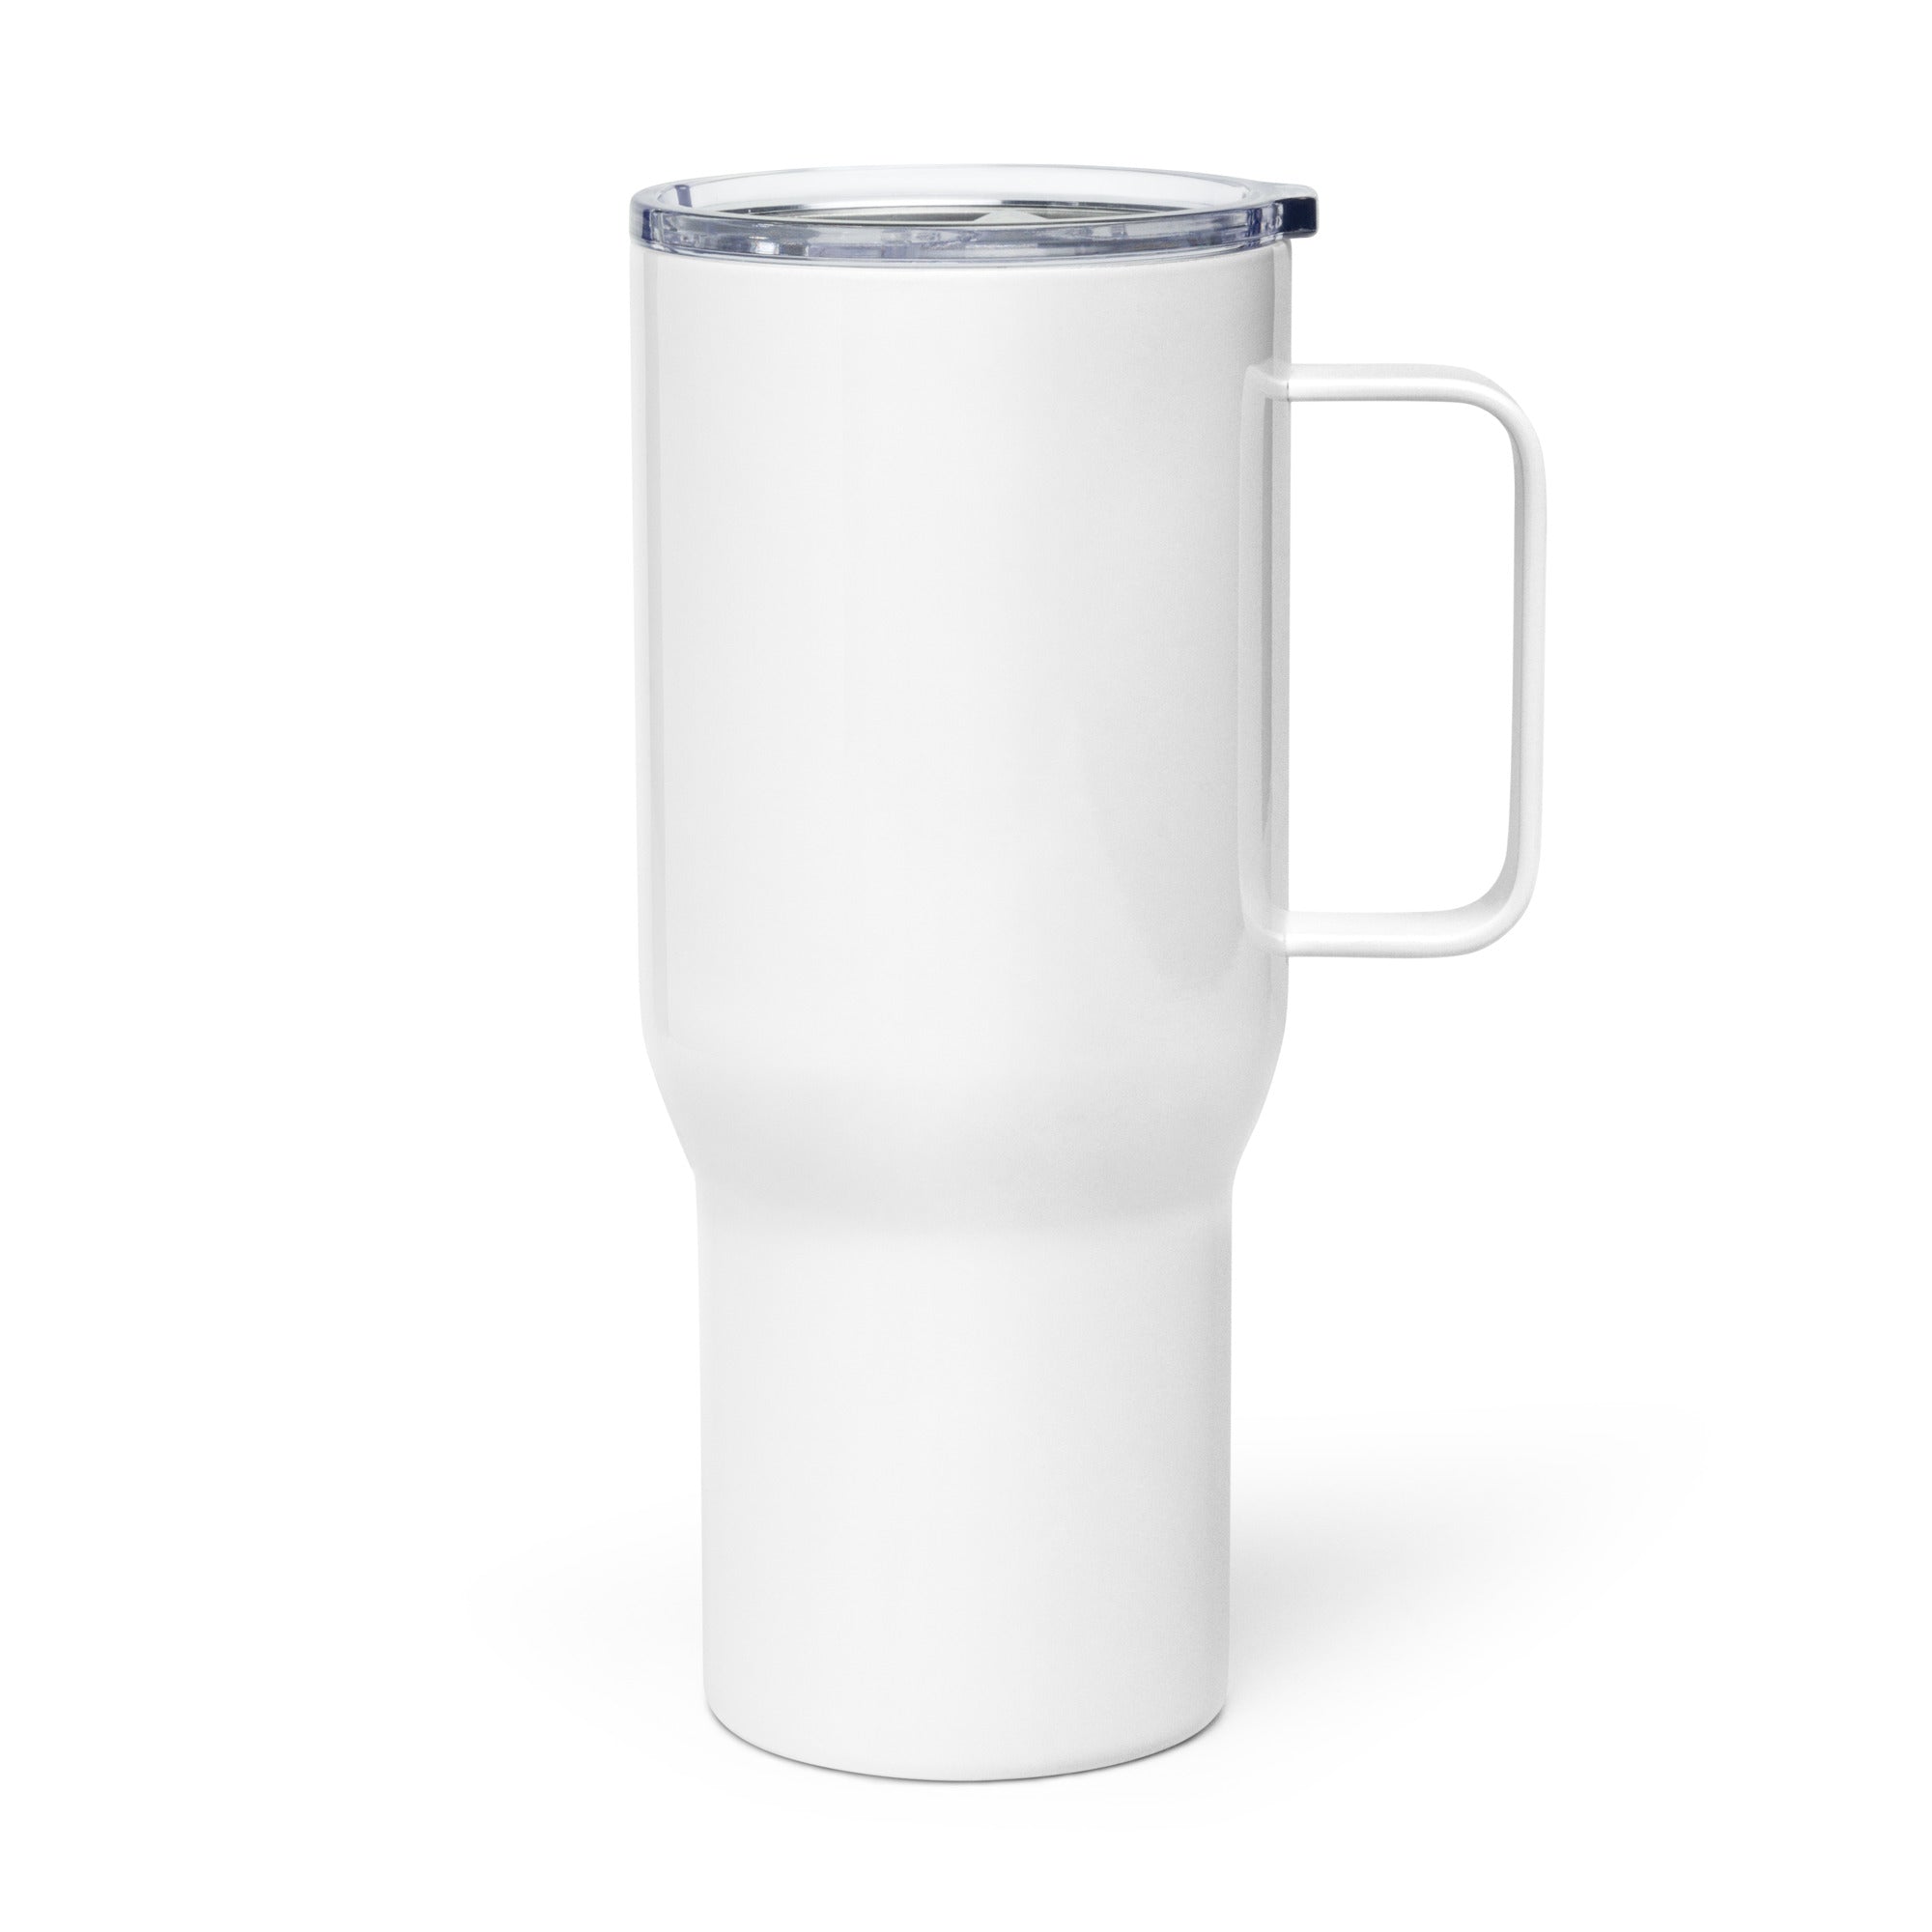 Marshfield Travel mug with a handle